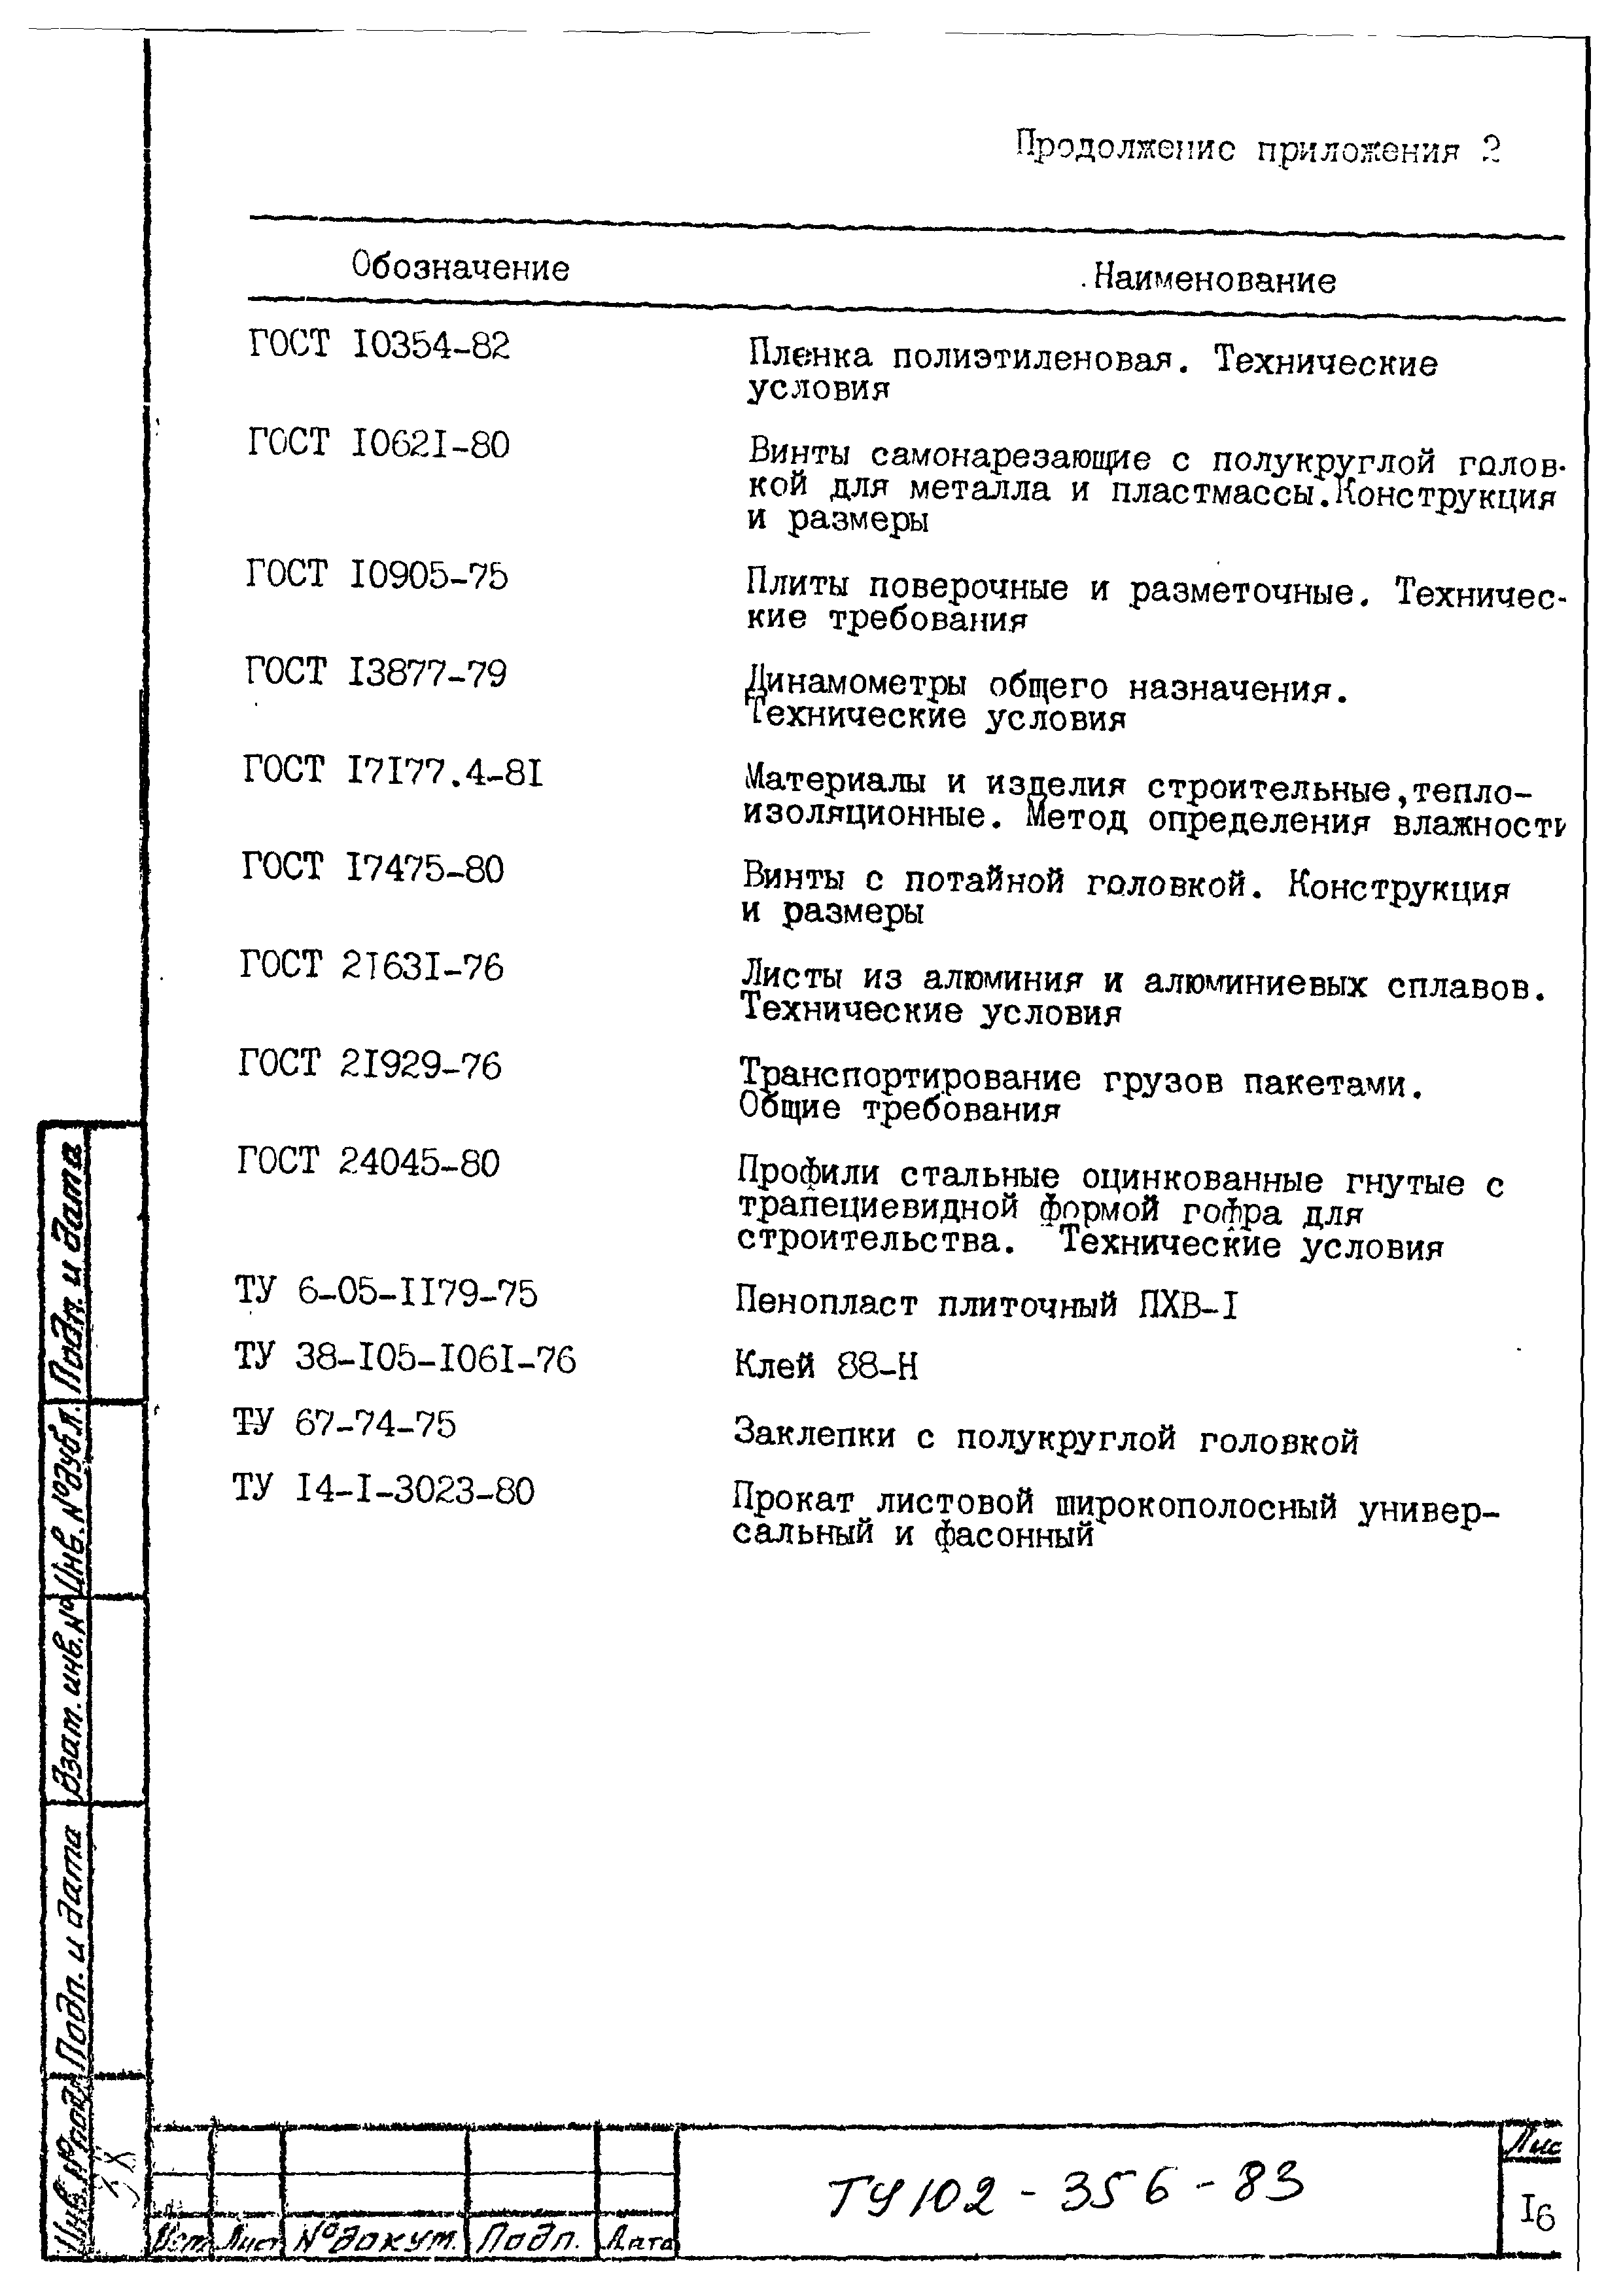 ТУ 102-356-83